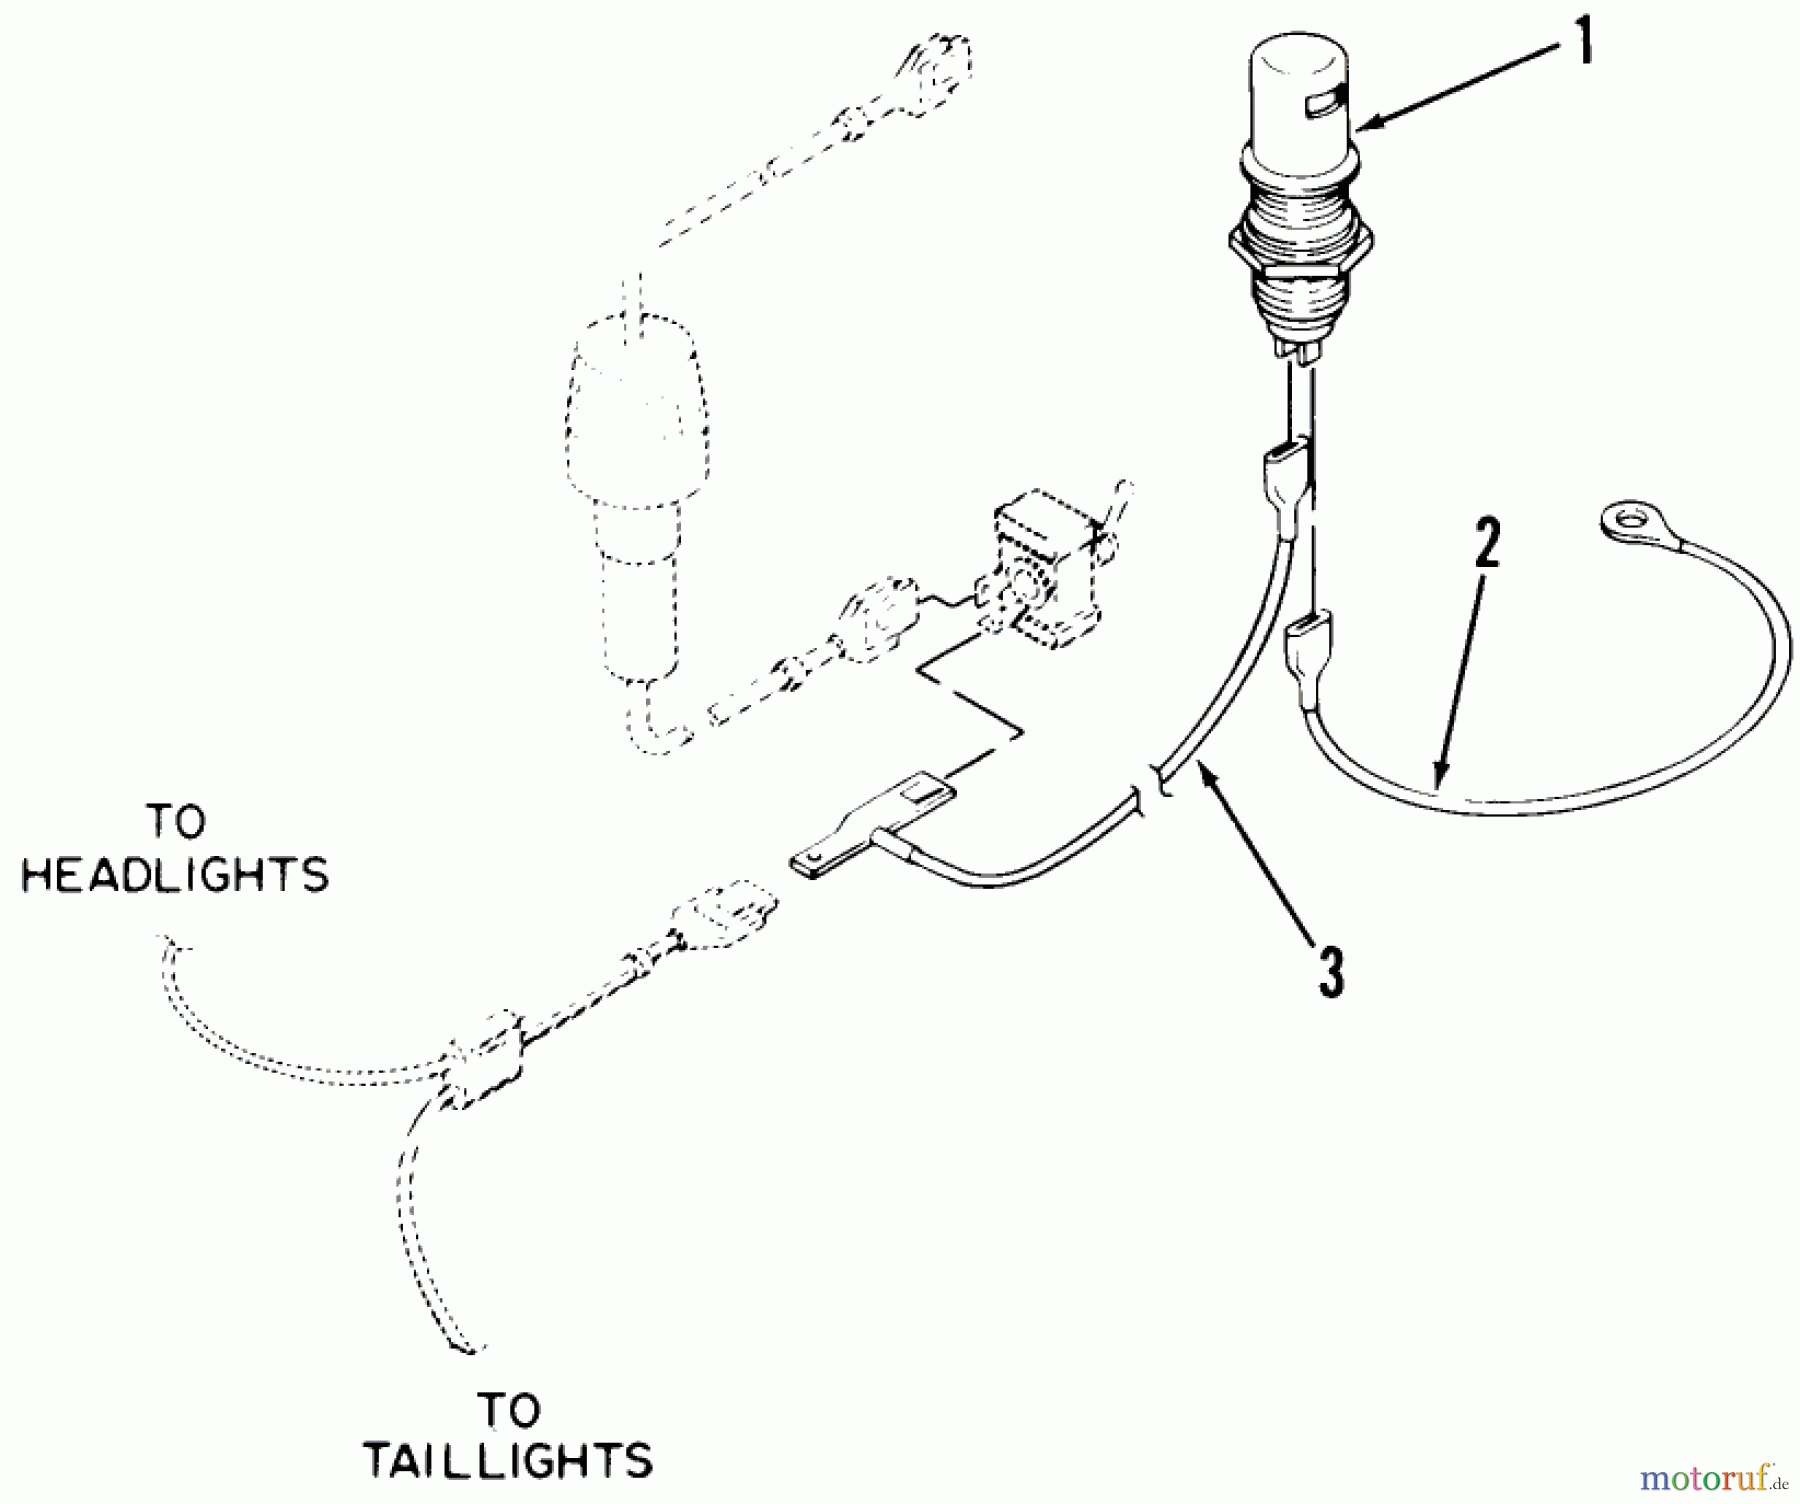  Toro Neu Accessories, Mower 80825 - Toro Dash Light, 1980 PARTS LIST FOR INSTRUMENT LIGHT FACTORY ORDER NUMBER 8-0825